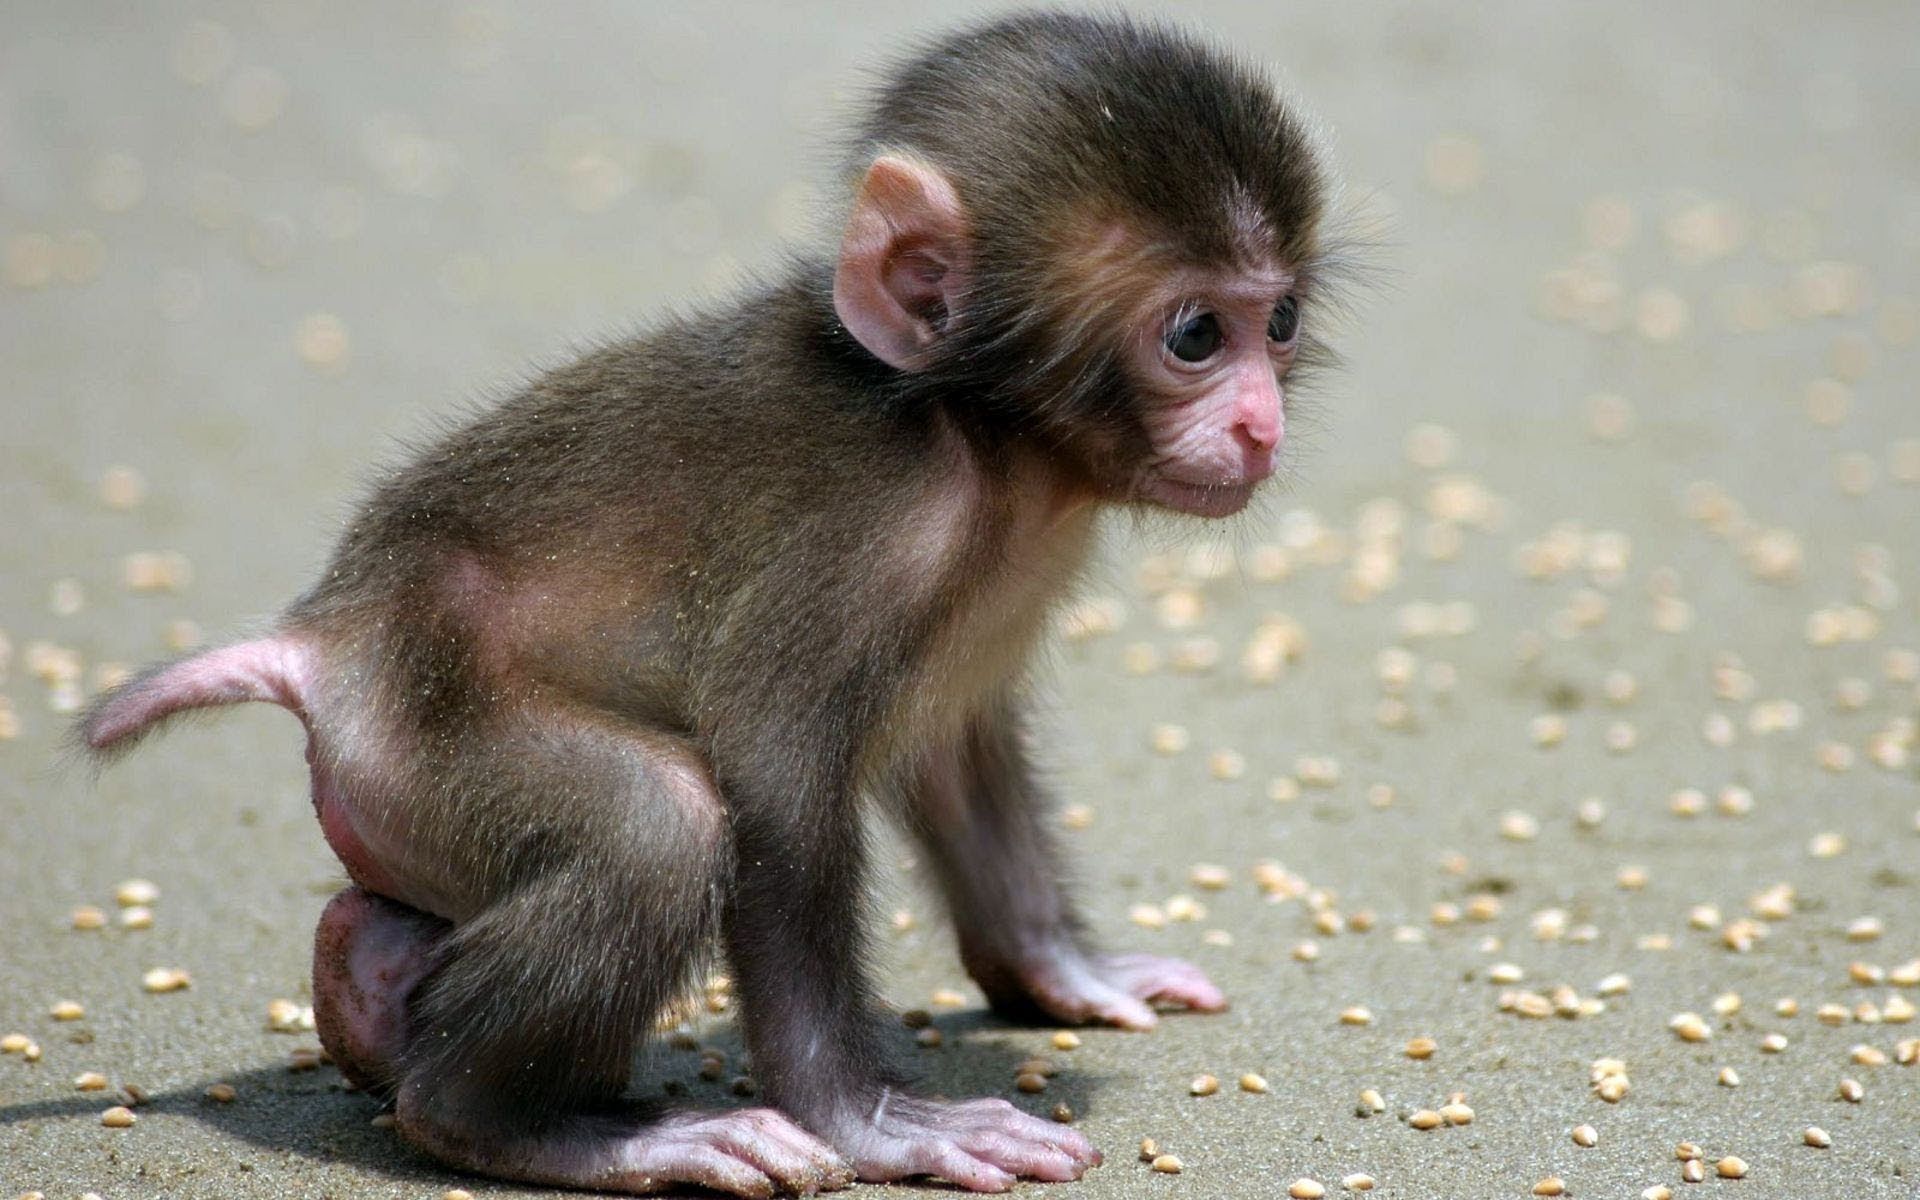 Funny Monkey | A Cute and Naughty Baby Monkey - YouTube